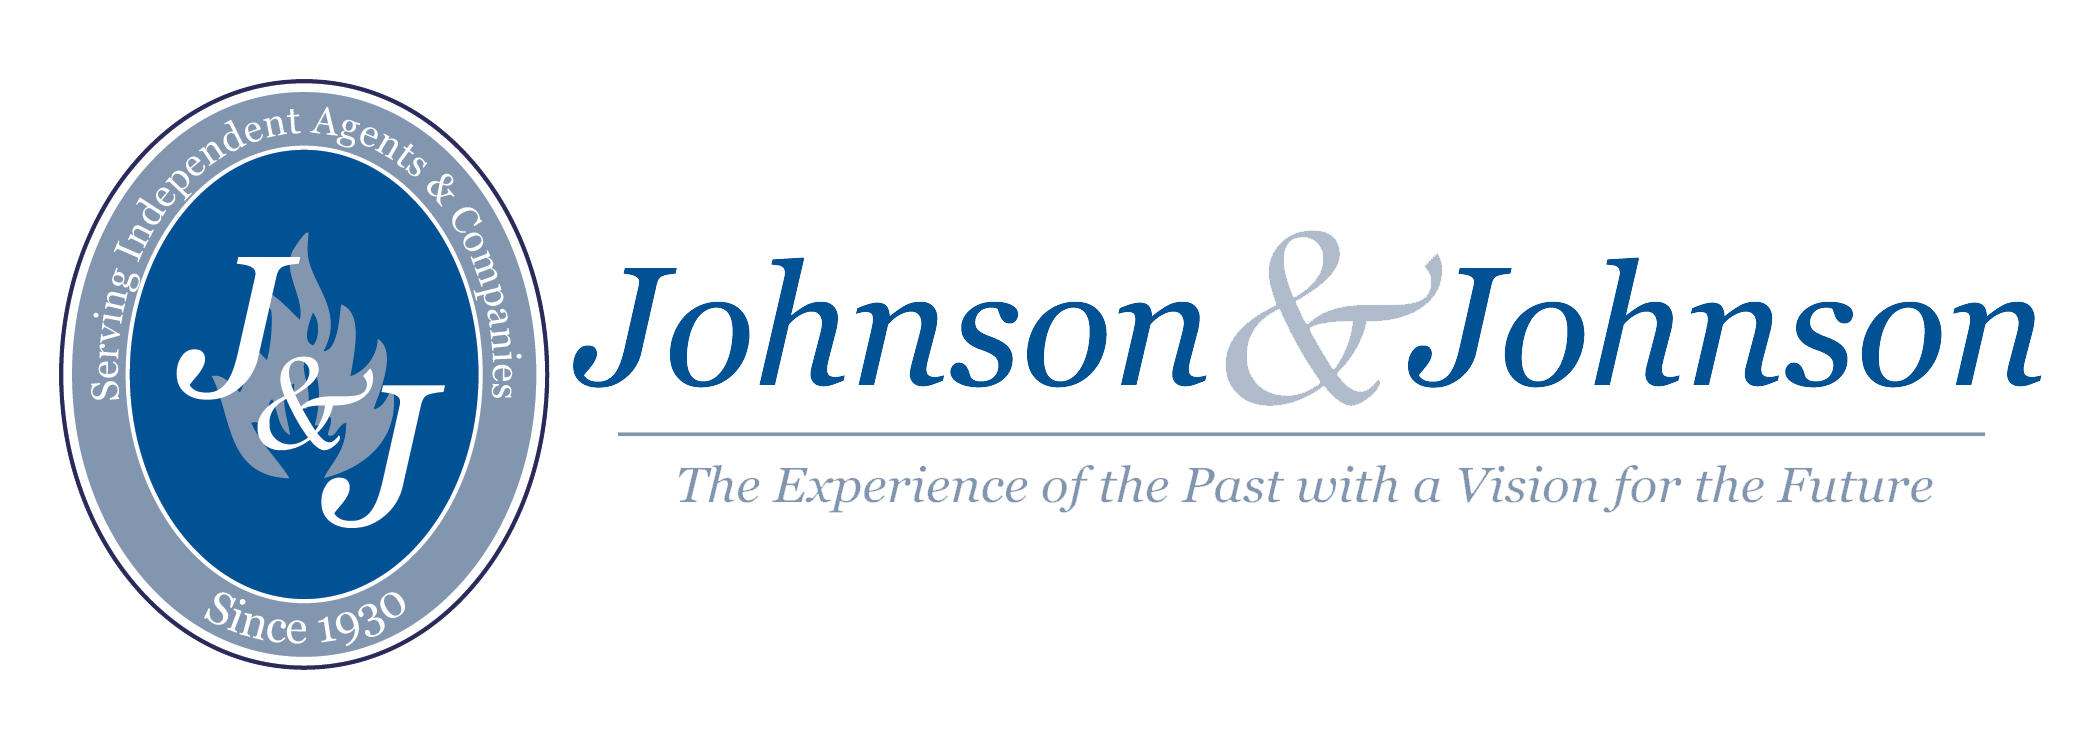 Johnson & Johnson Profile